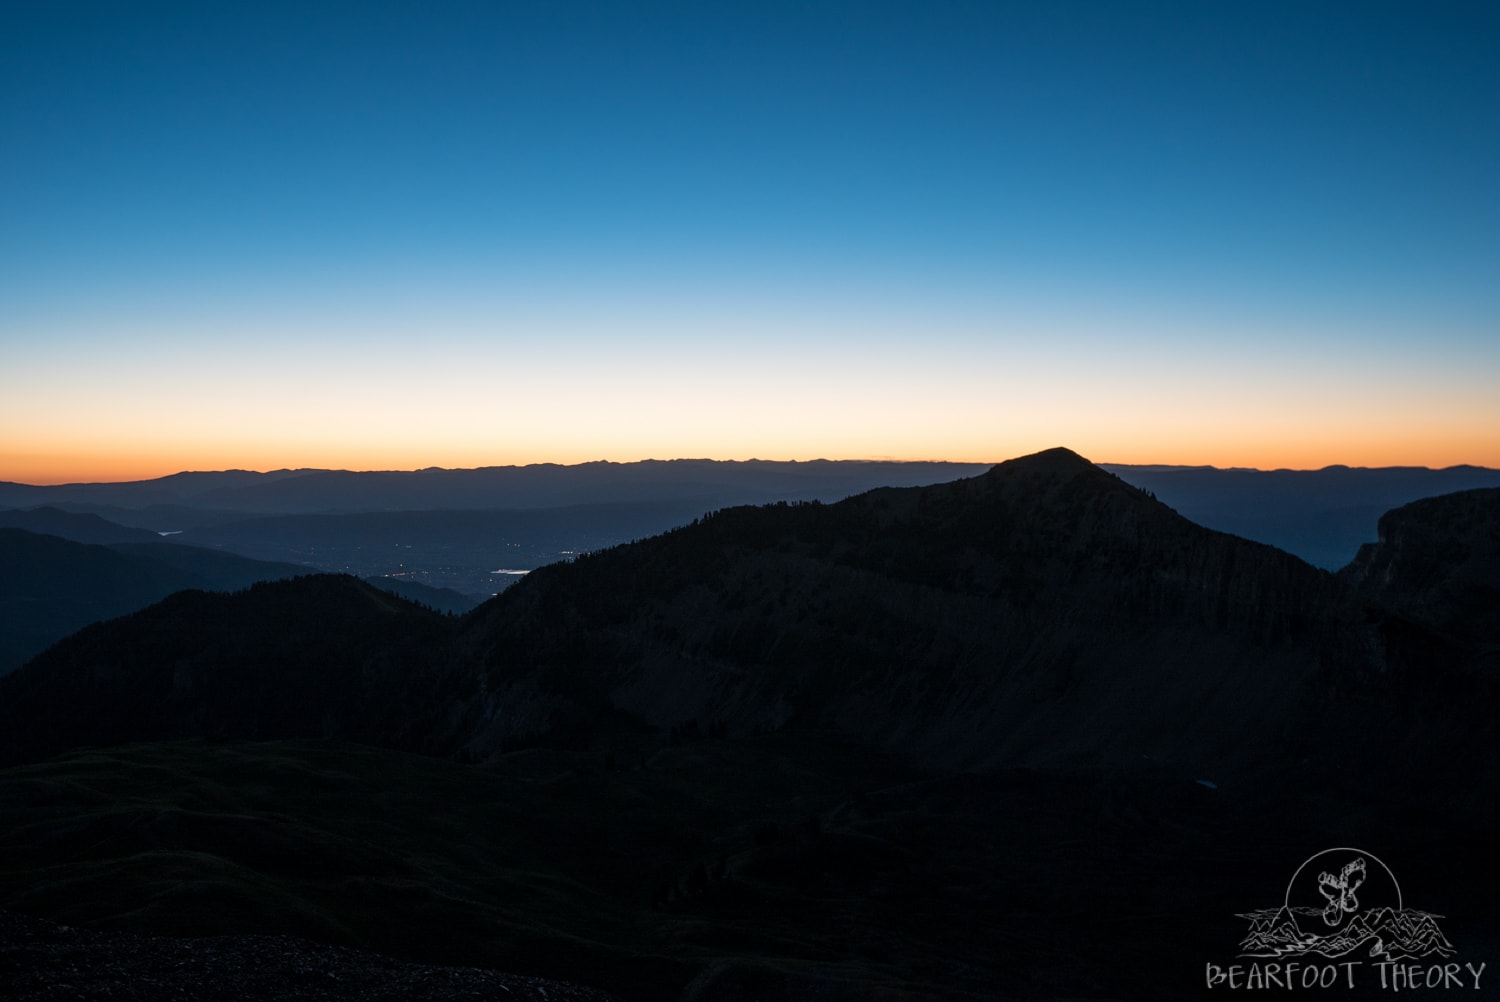 Sunrise on the way to the Mount Timpanogos summit